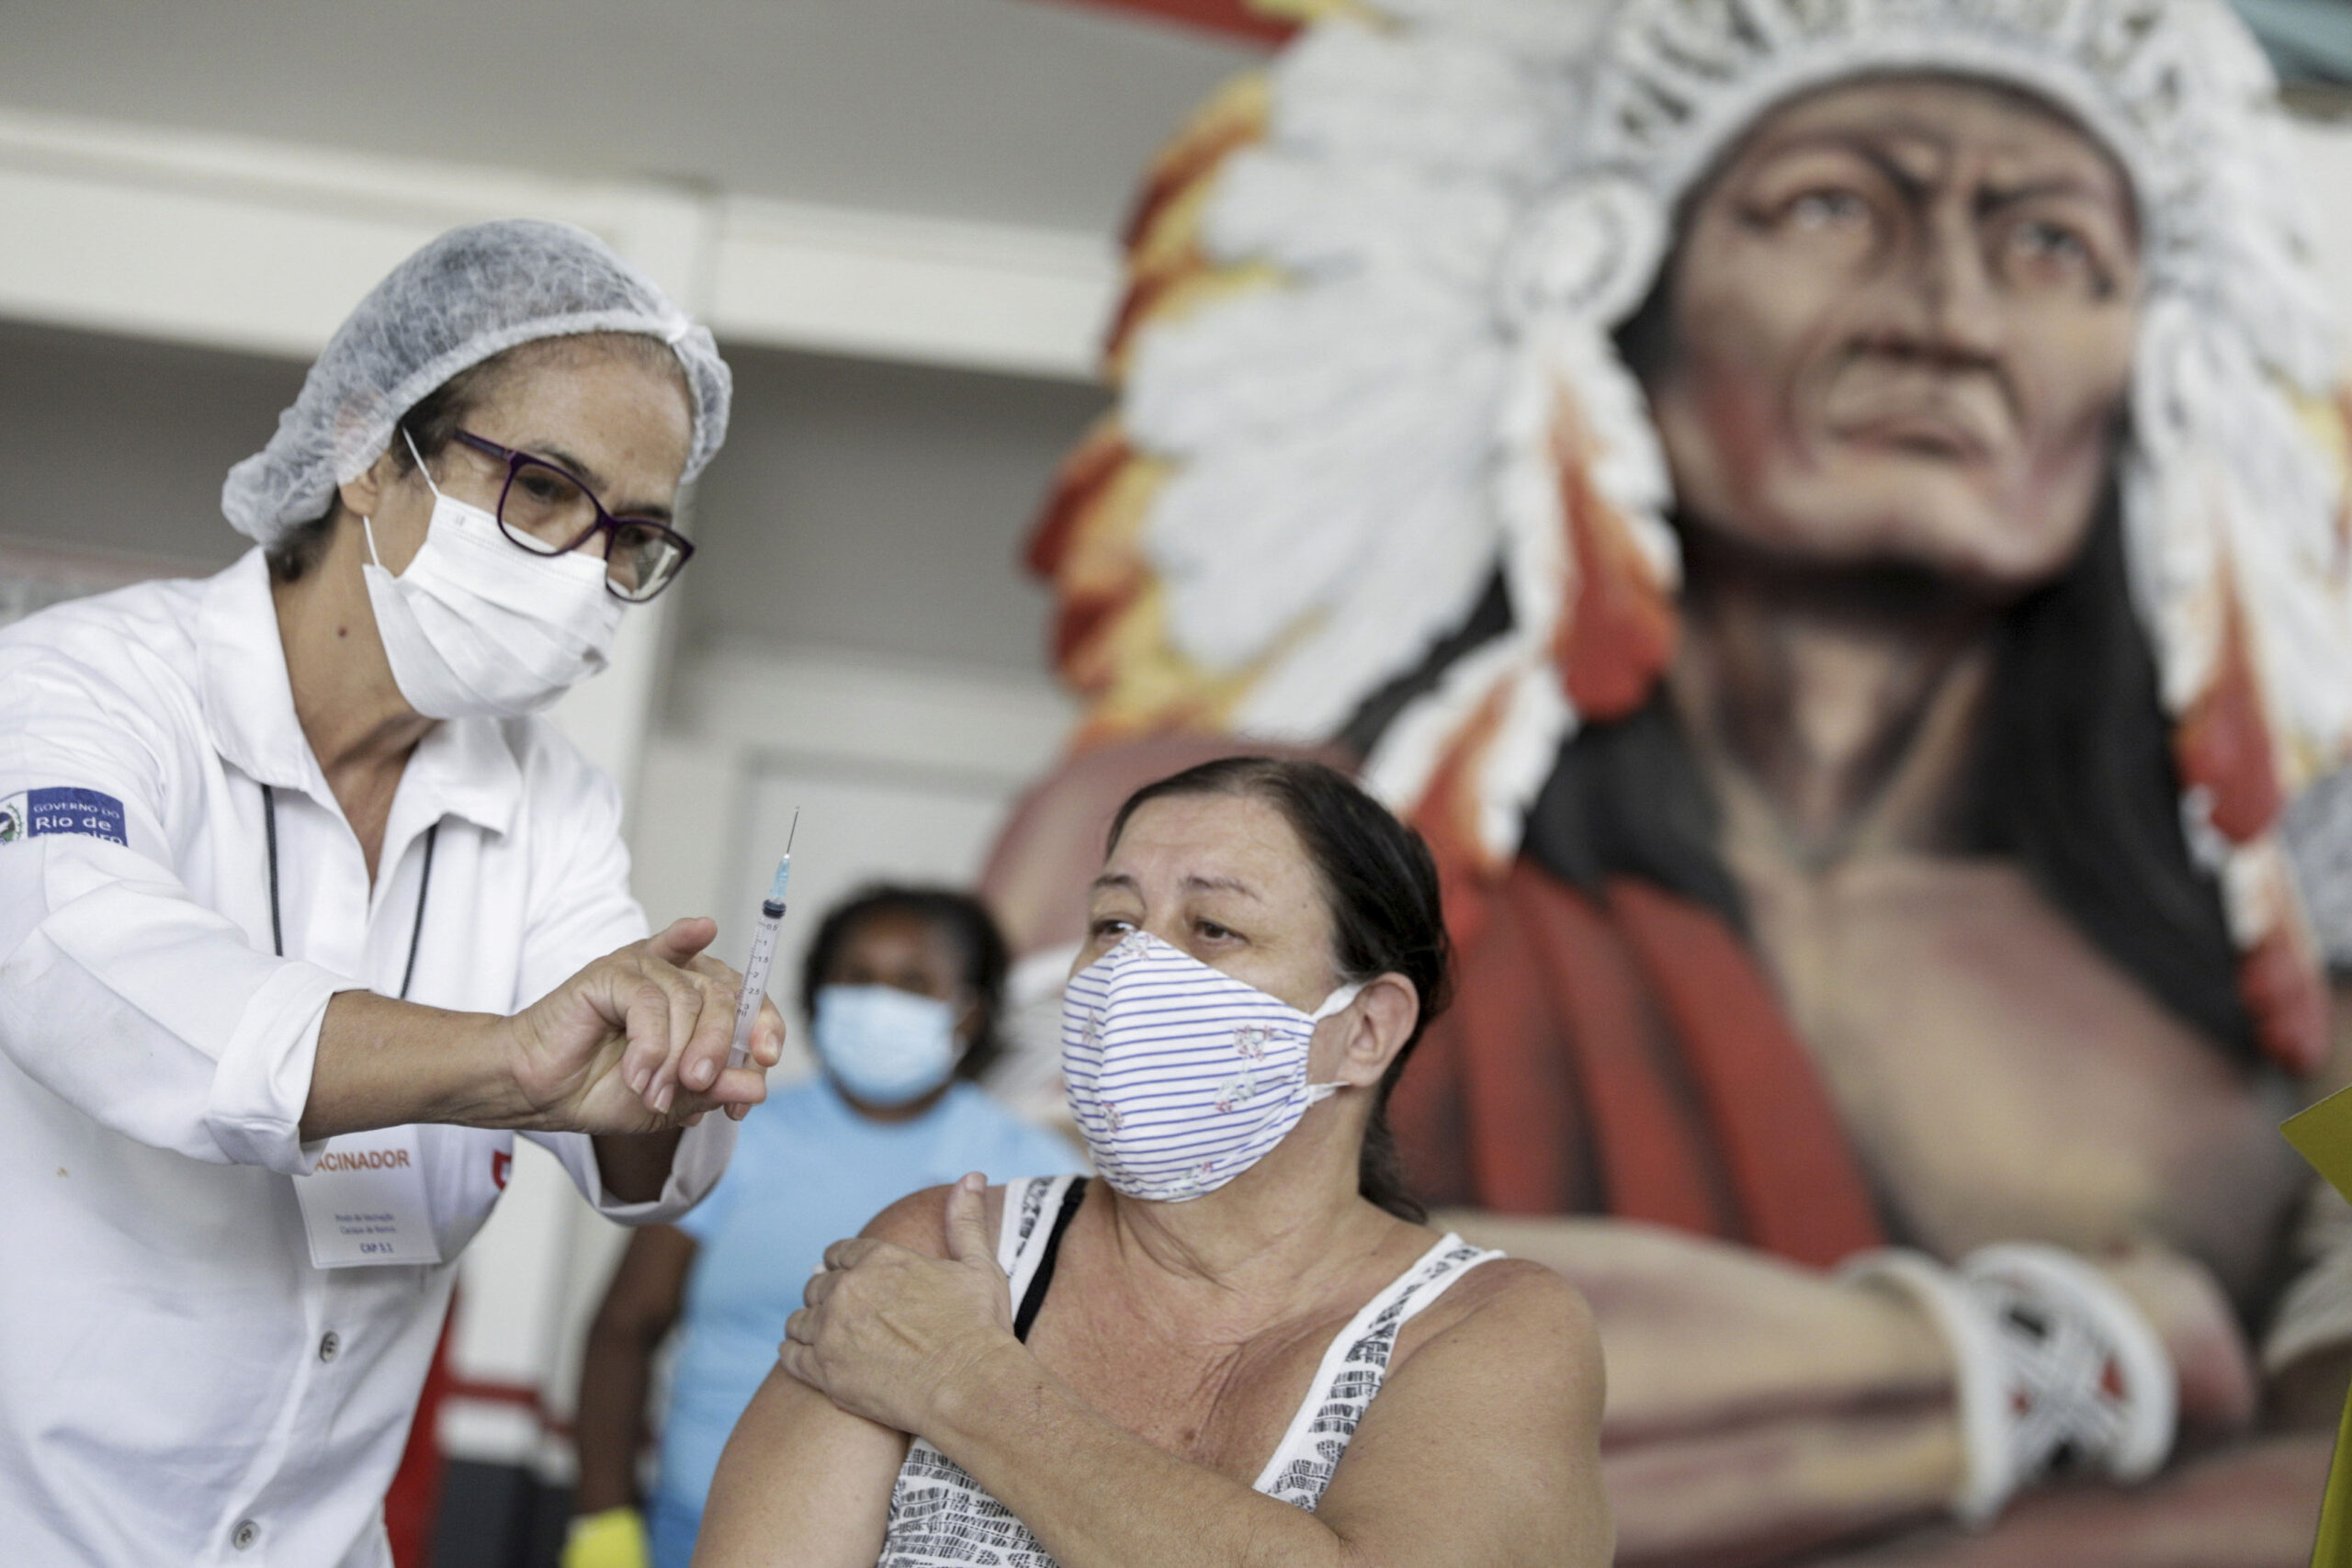 Brazil is experiencing surging infection rates. A healthcare worker gives a dose of Sinovac's CoronaVac COVID-19 vaccine at Cacique de Ramos, Rio de Janeiro, Brazil April 8, 2021.